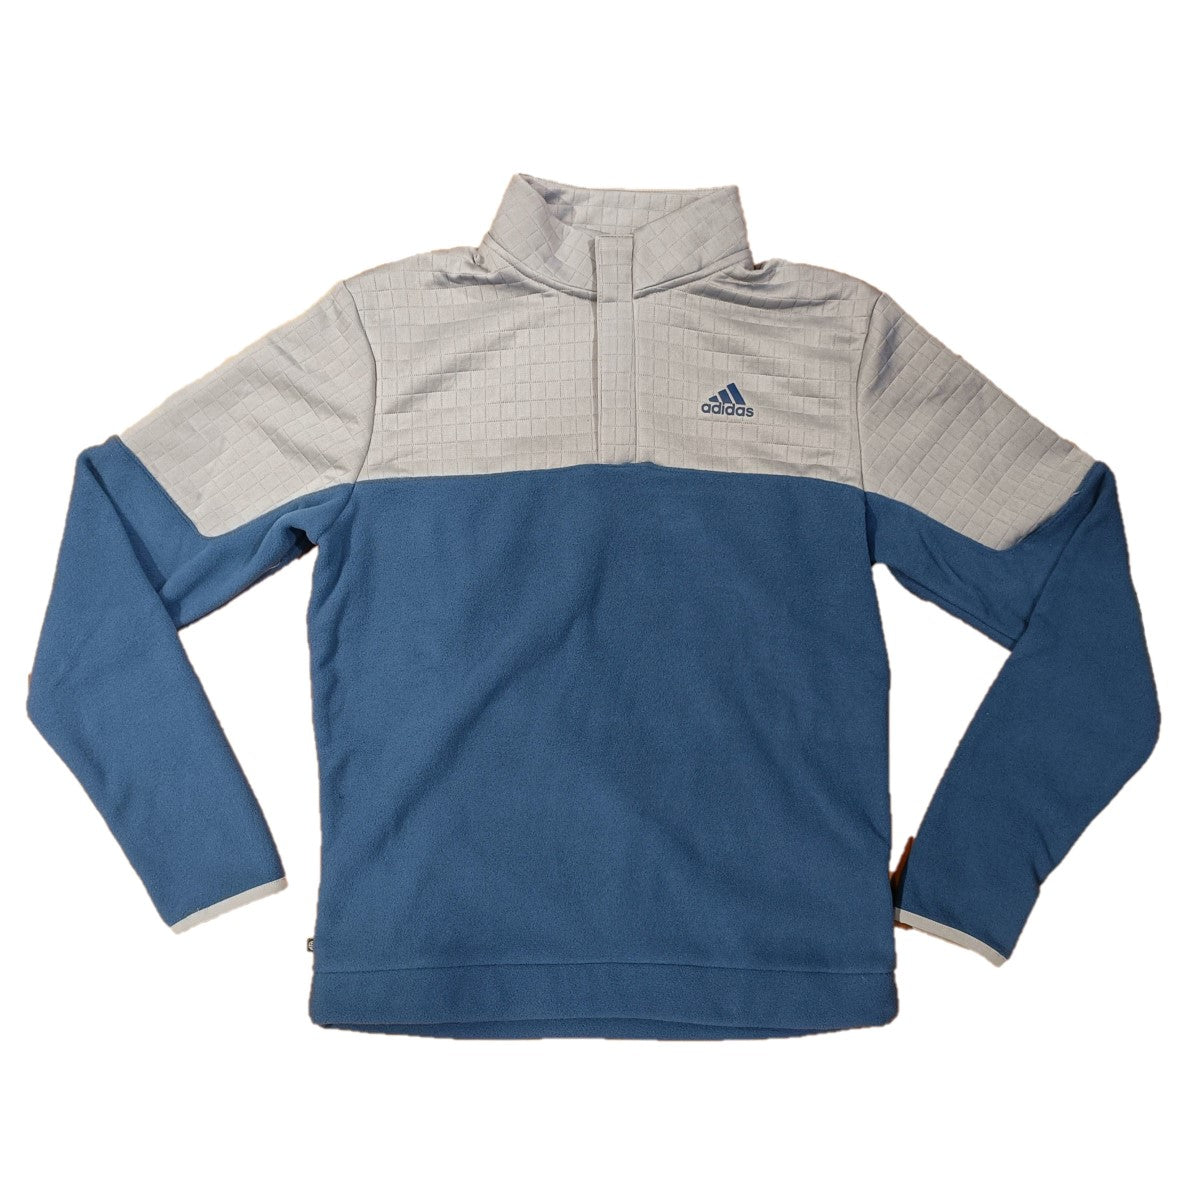 Adidas DWR Colourblock Quarter Zip Sweatshirt Men's (Grey Navy)